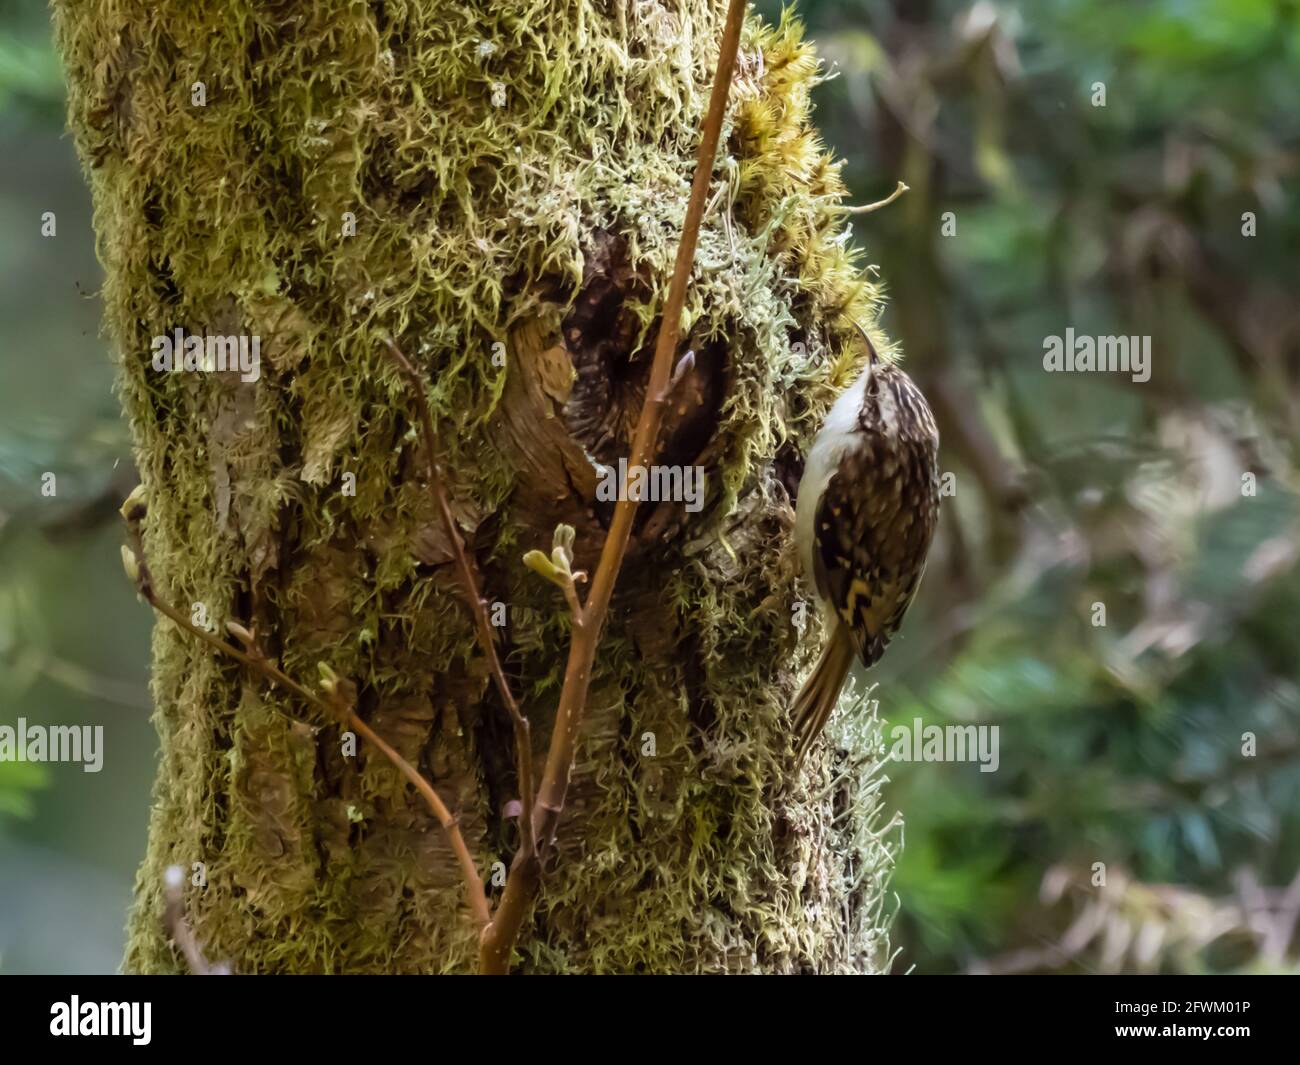 A Eurasian Treecreeper or Common Treecreeper (Certhia familiaris) working its way up a moss covered tree in Scotland. Stock Photo